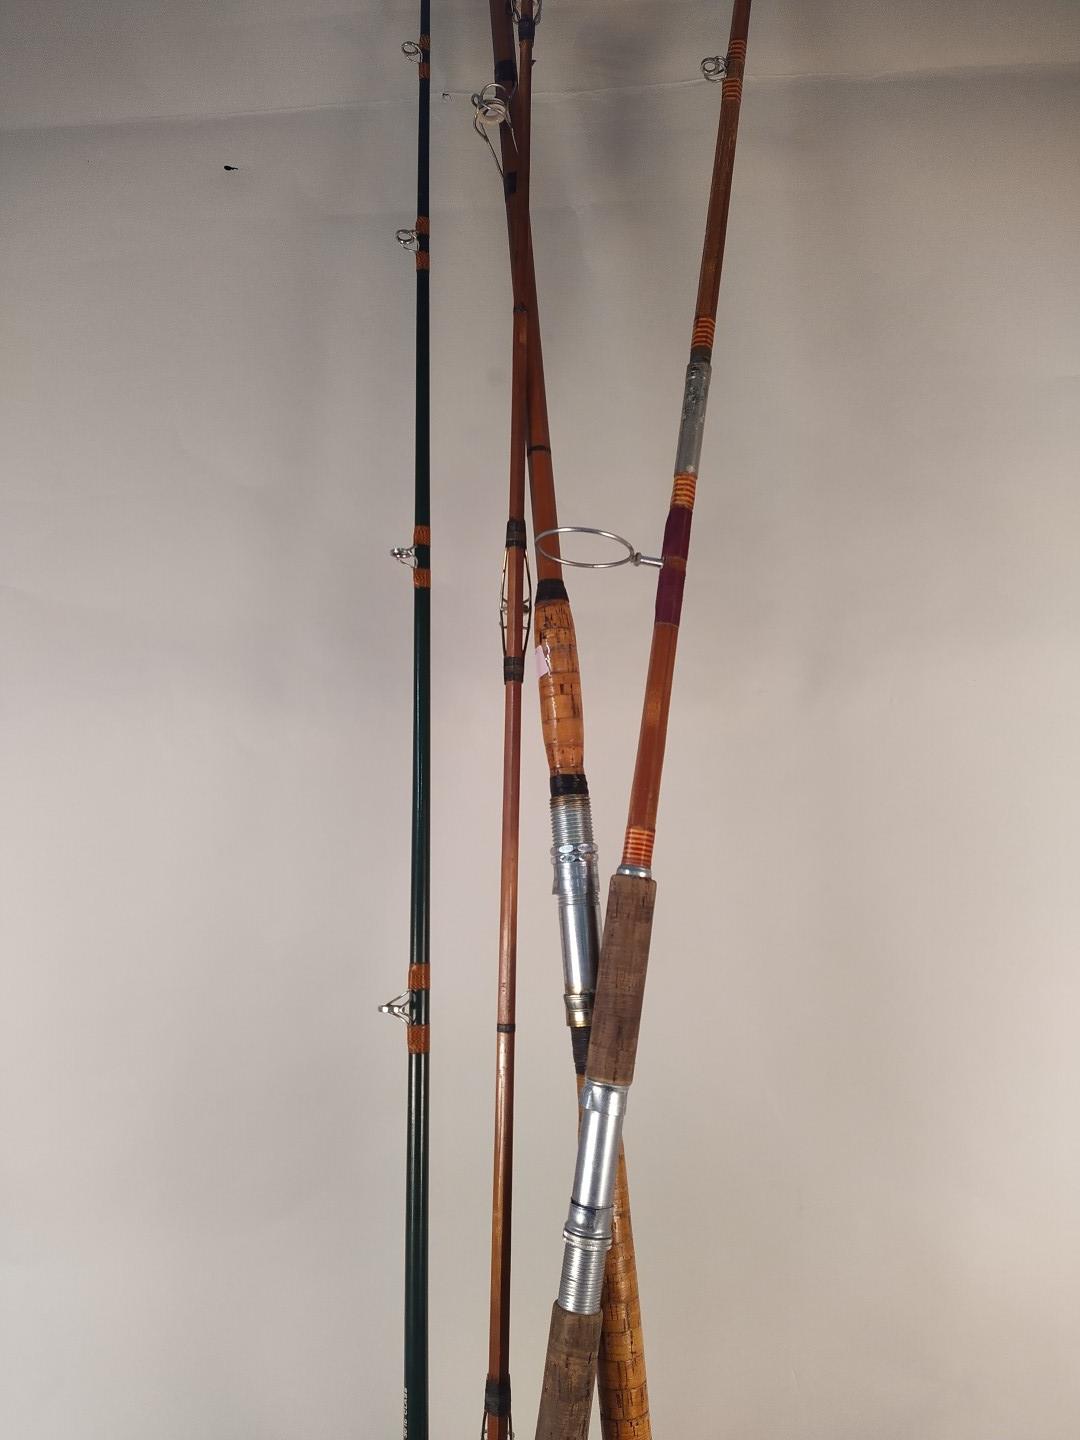 Vintage cane fishing rods, walking sticks, - Image 3 of 3